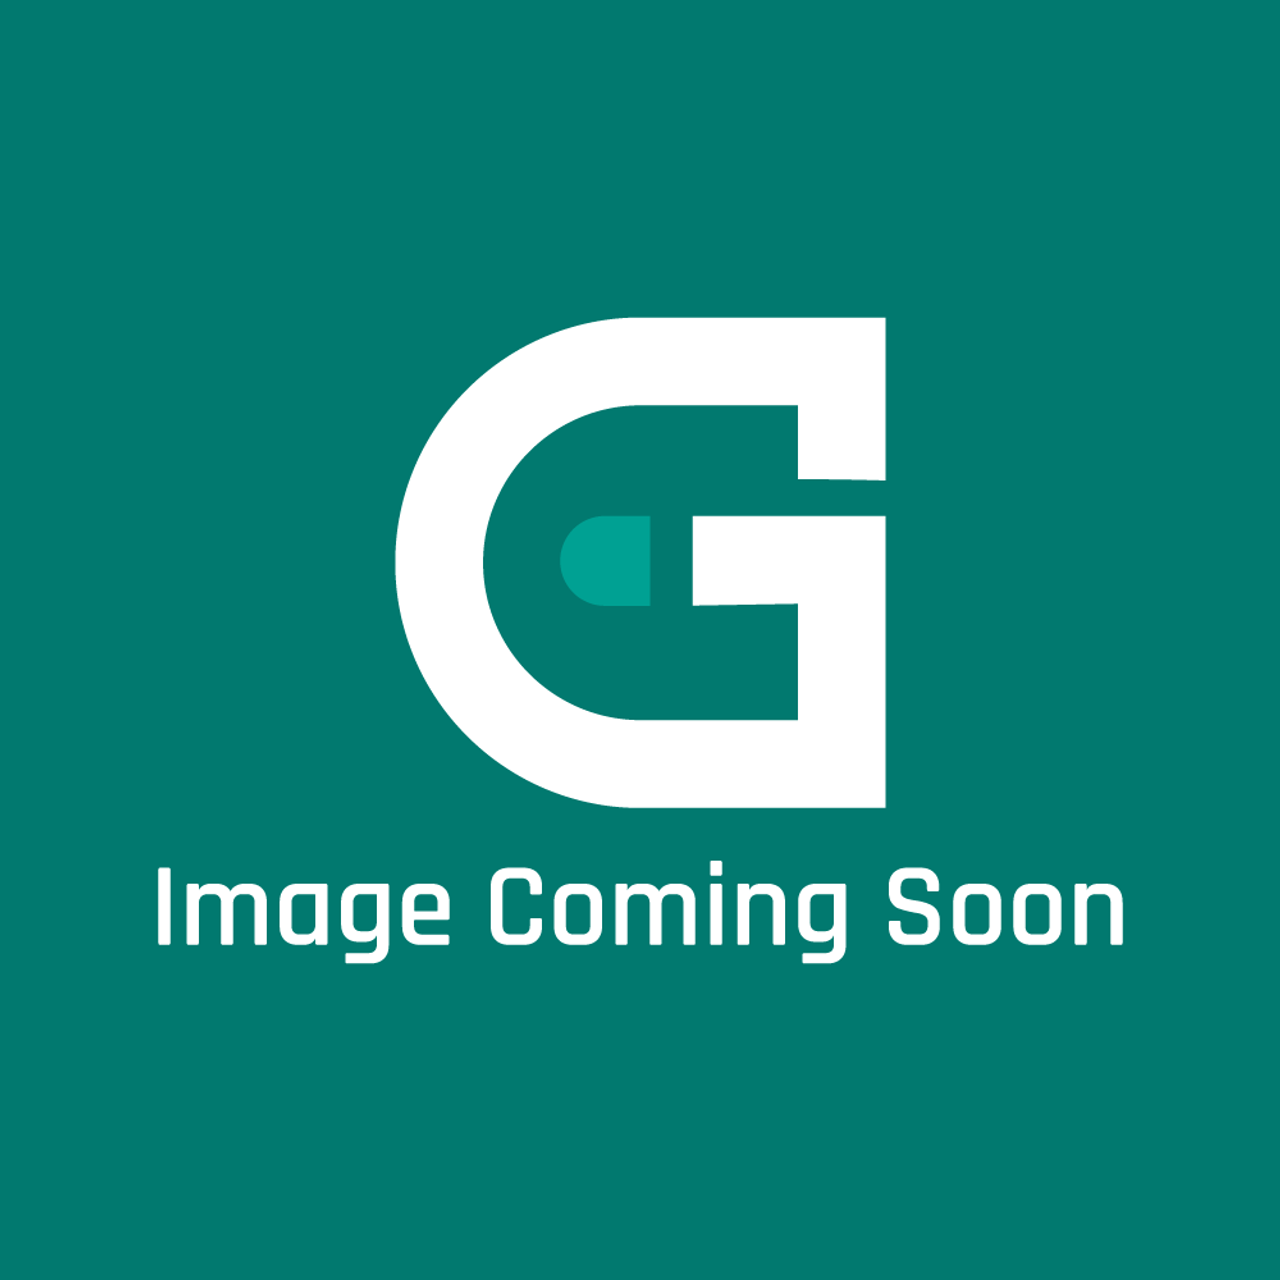 Groen 061471 - Insulation Board 1" X - Image Coming Soon!